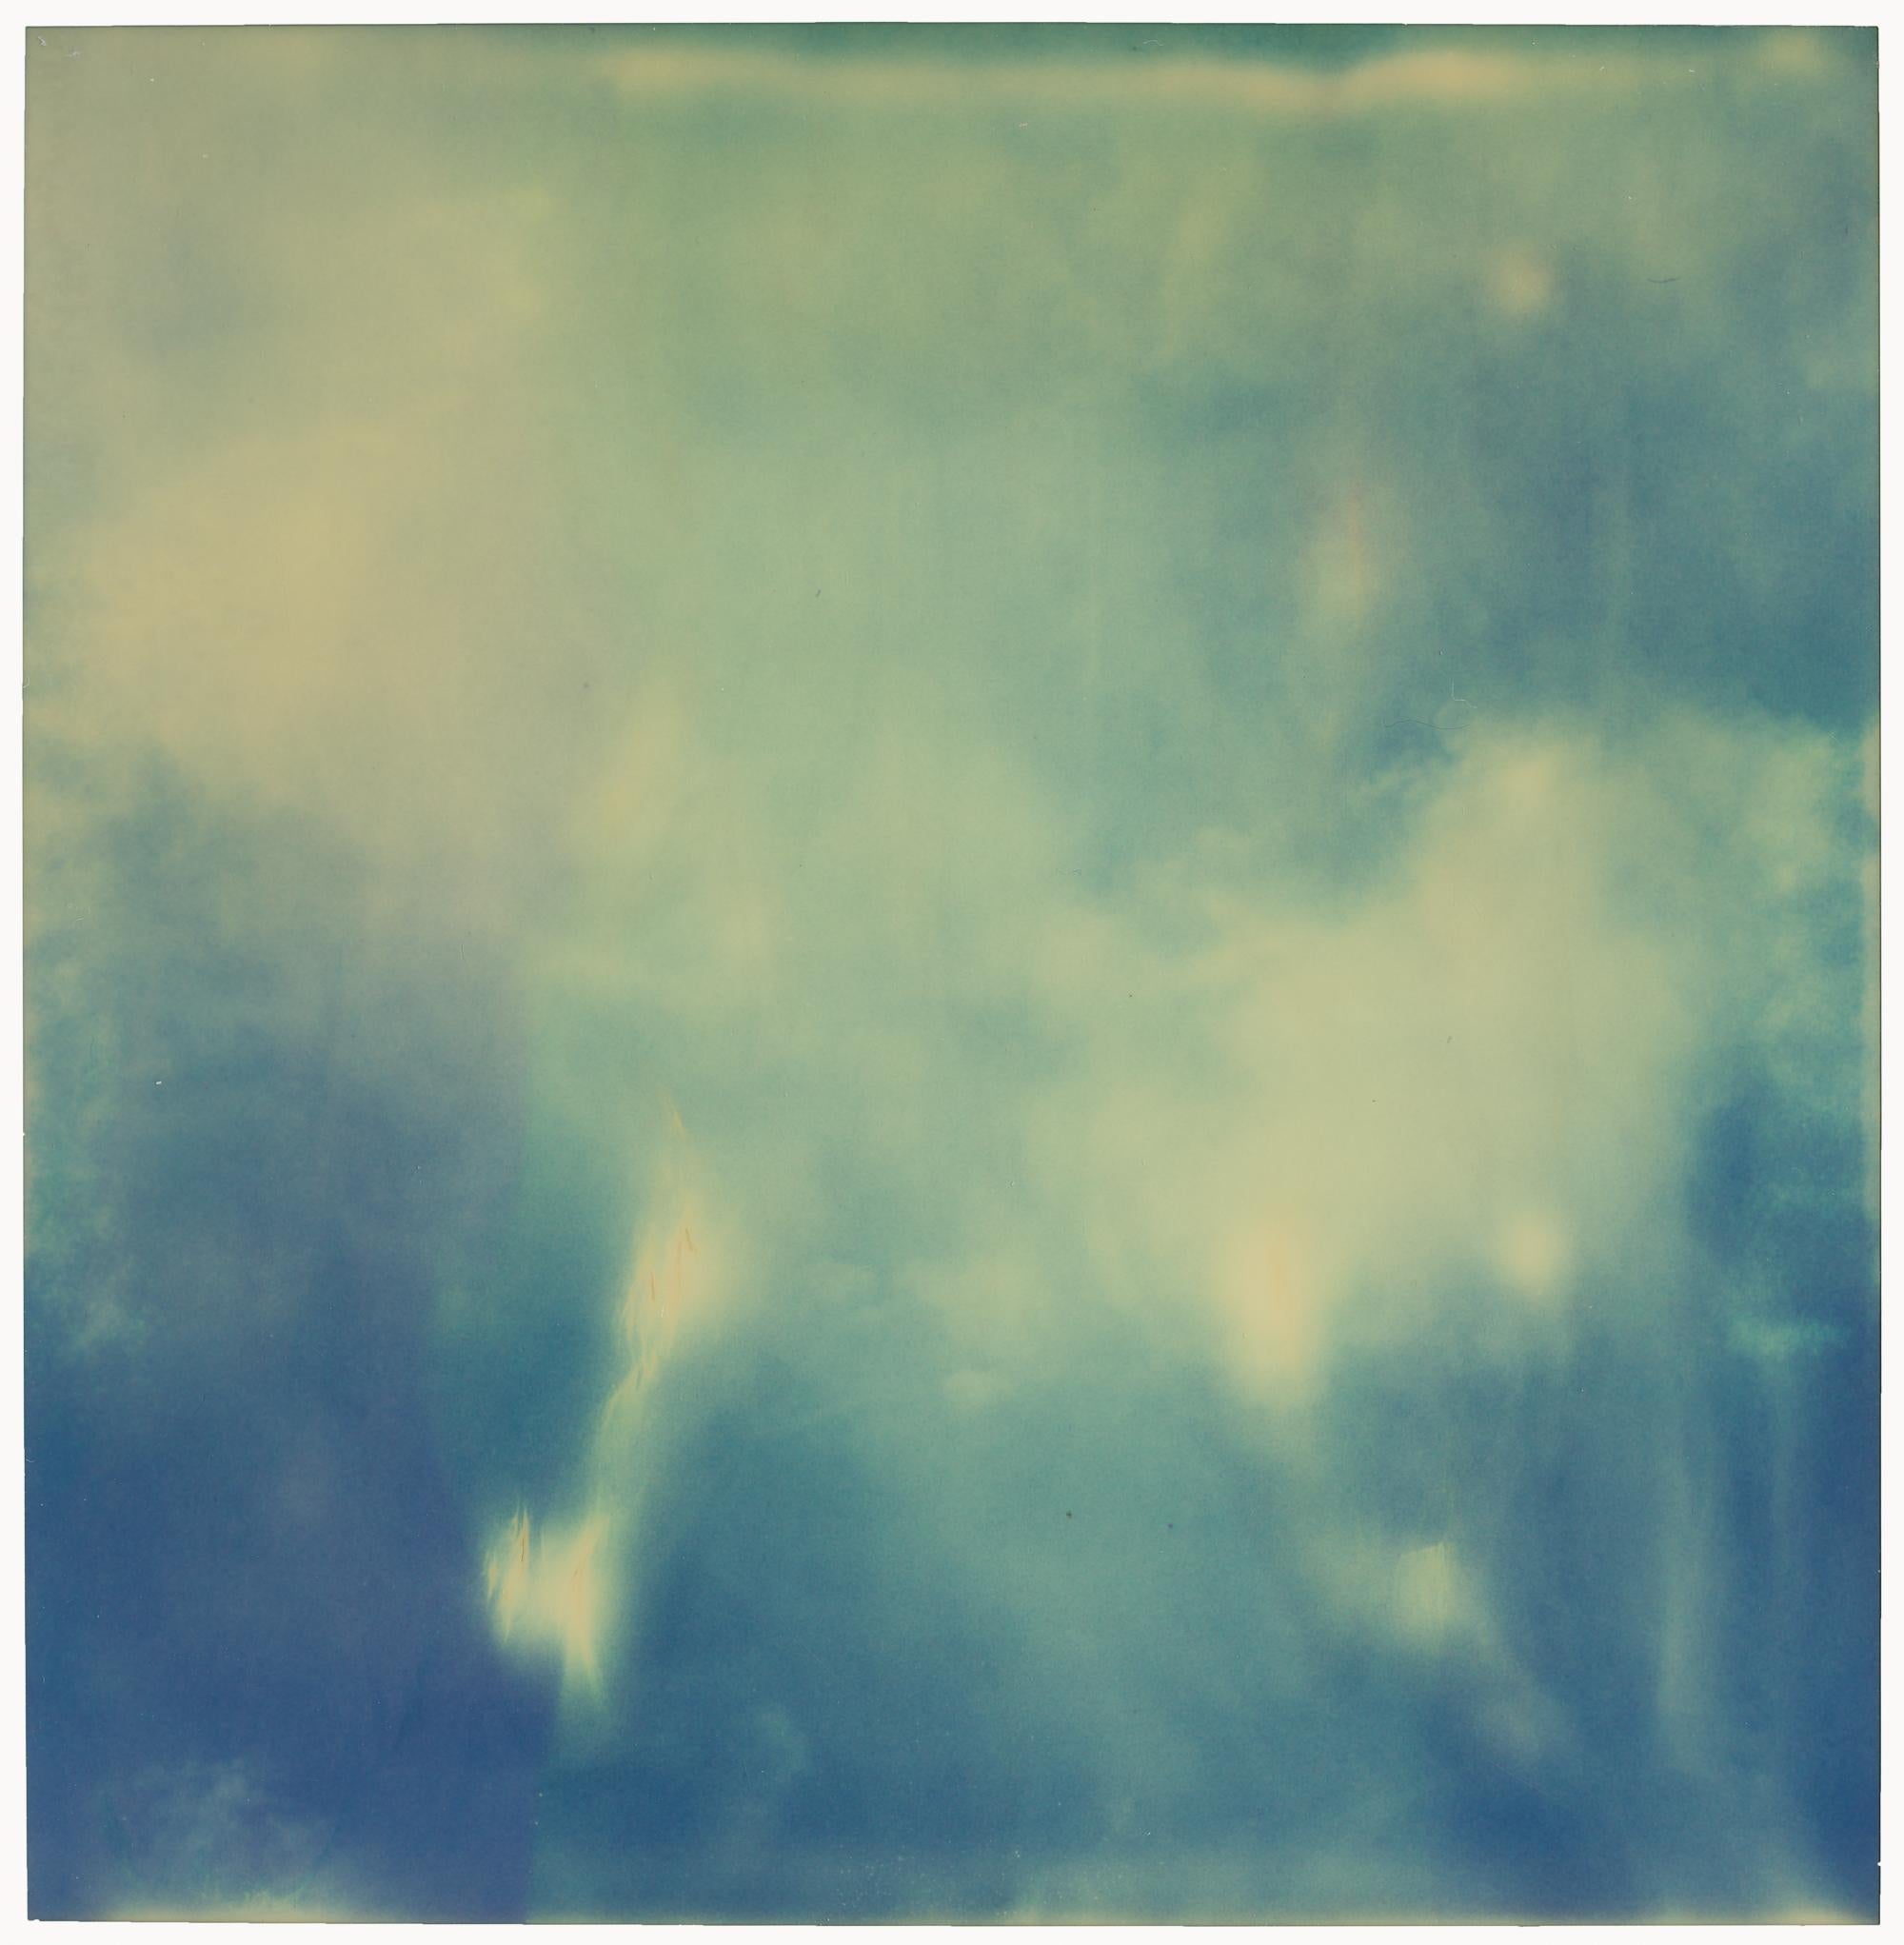 Abstract Photograph Stefanie Schneider - Blue Space Light - Planet of the Apes 07 - 21e siècle, Polaroïd, Abstrait